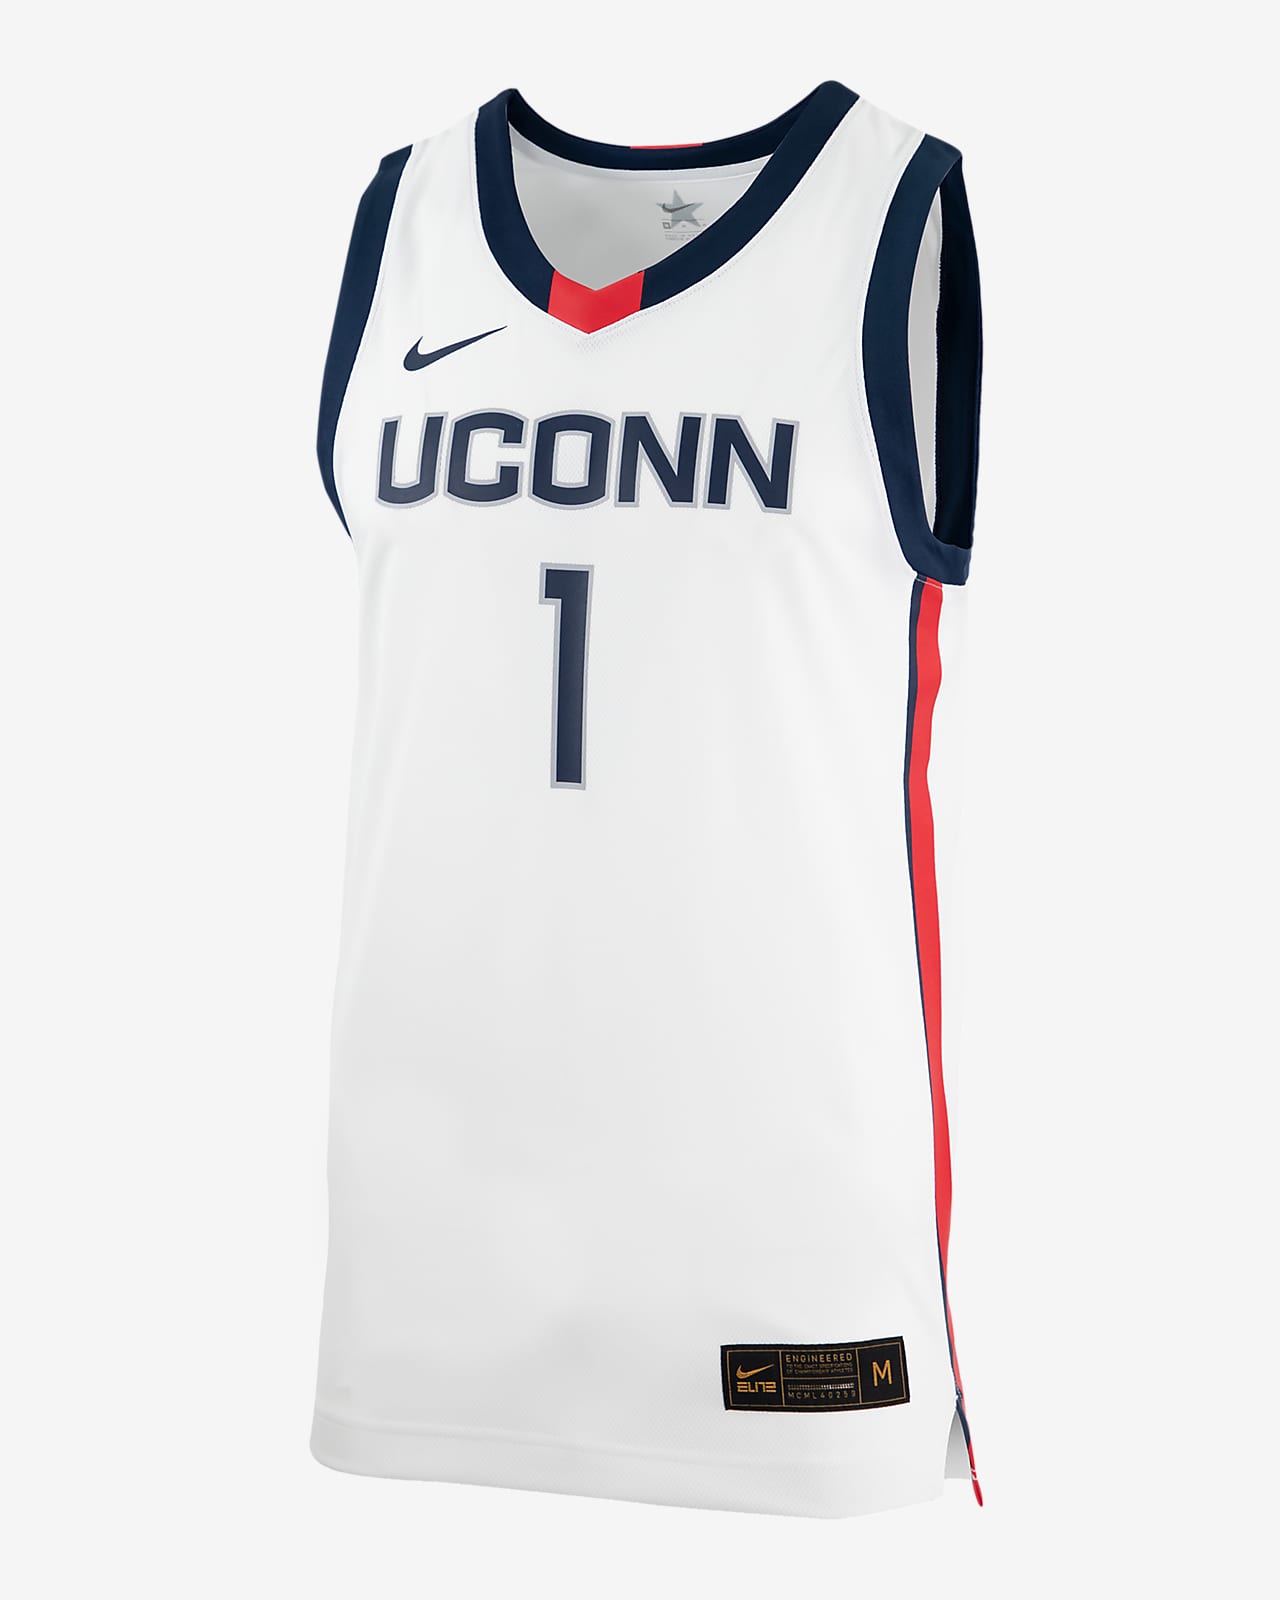 Nike College (UConn) Basketball Jersey 